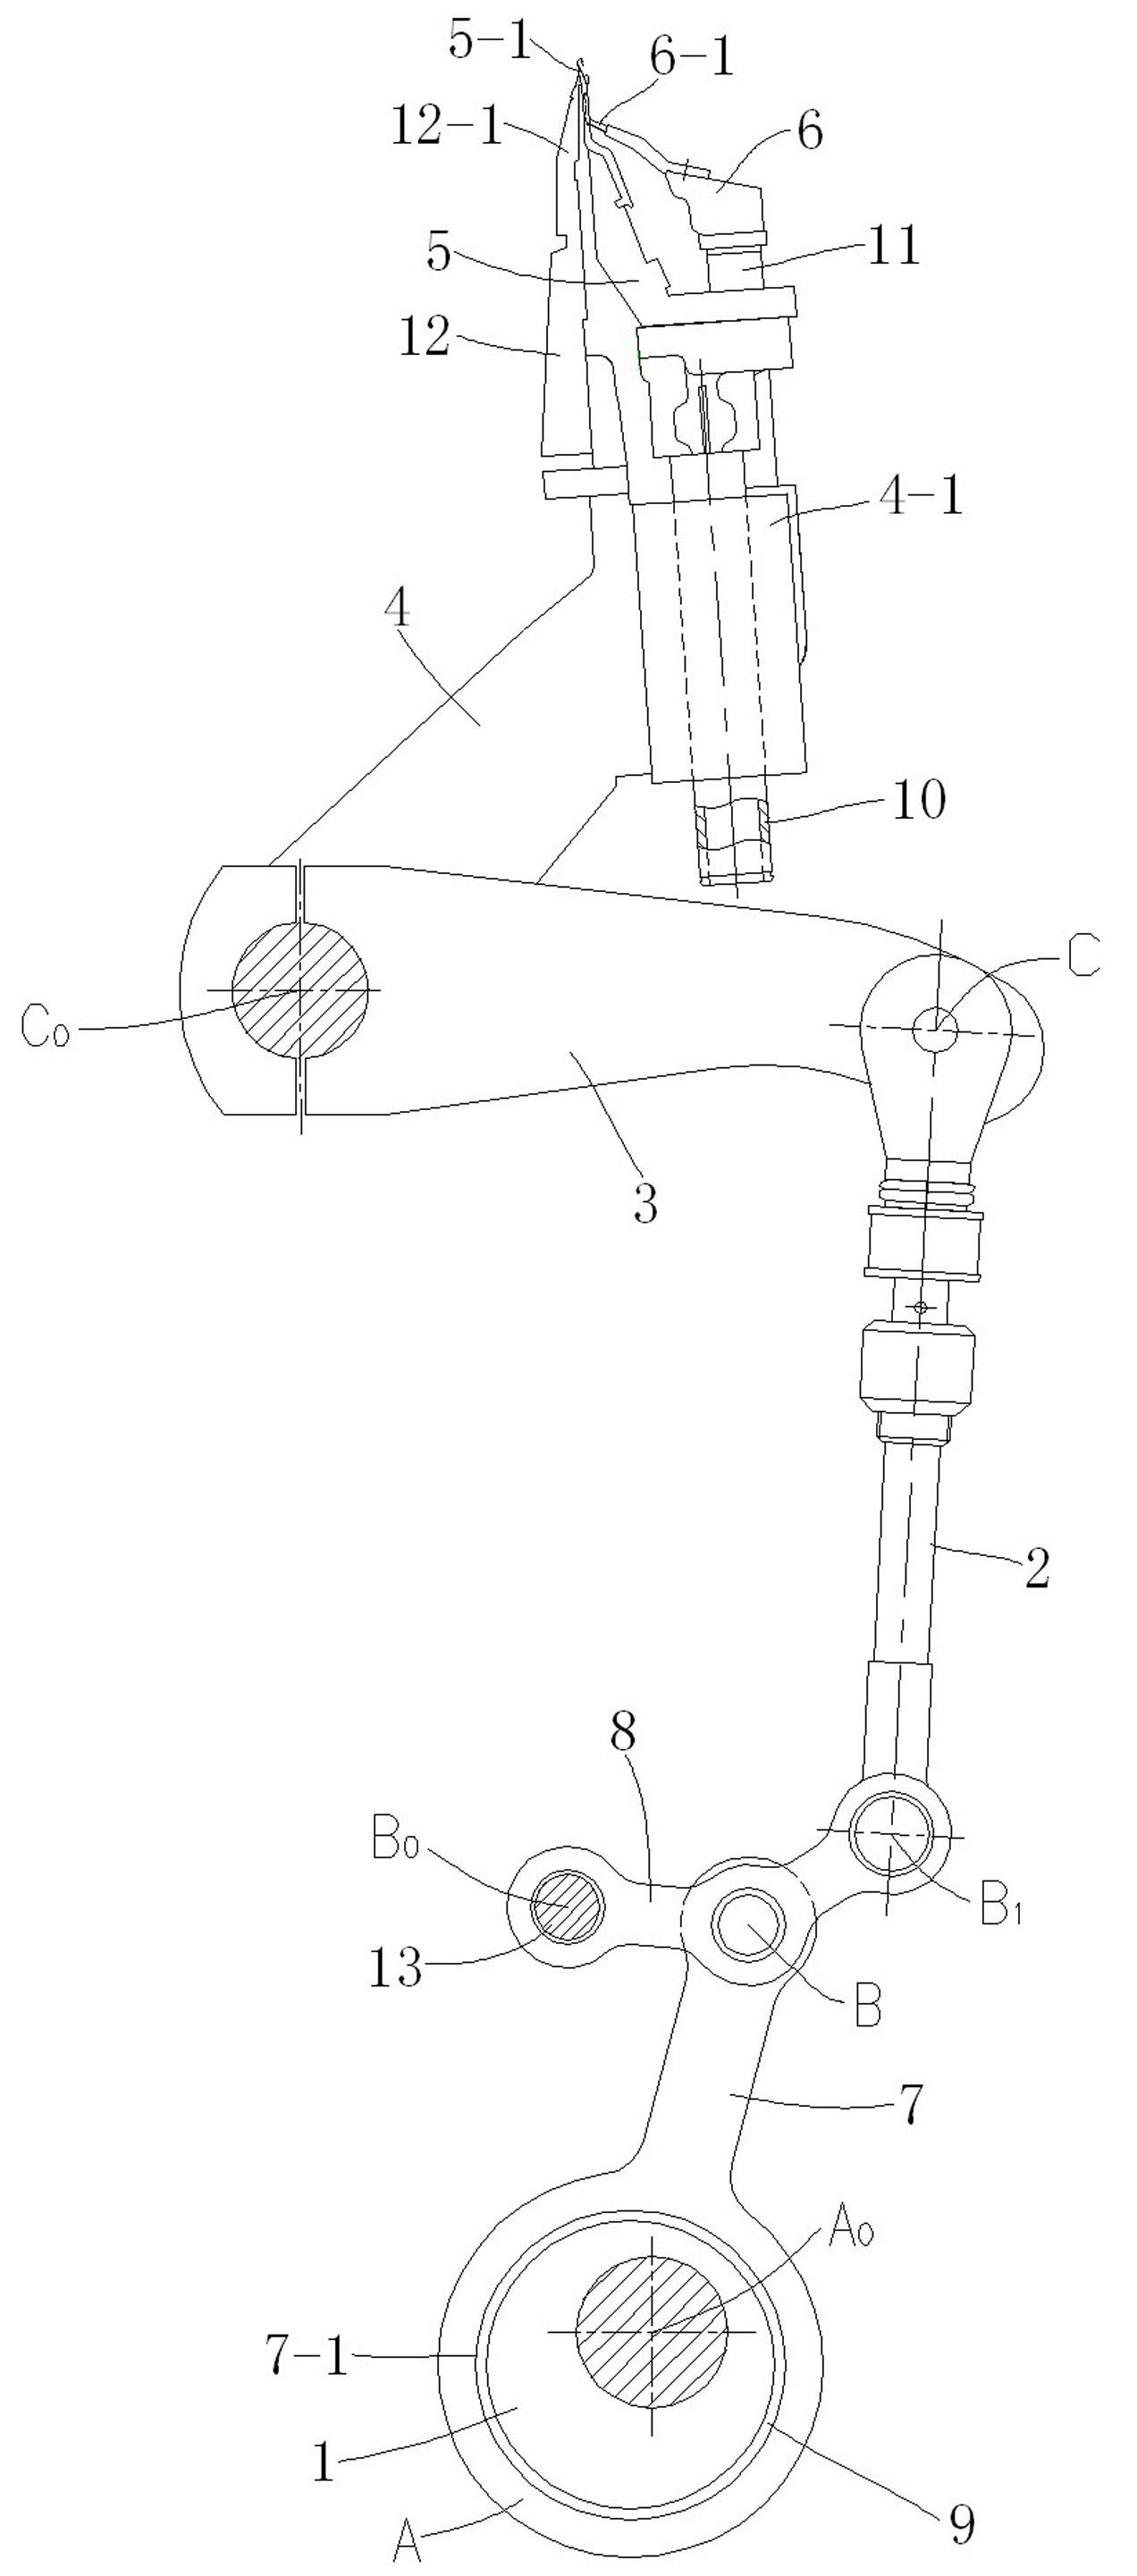 Needle bed swing mechanism for multi-bar Raschel warp knitting machine